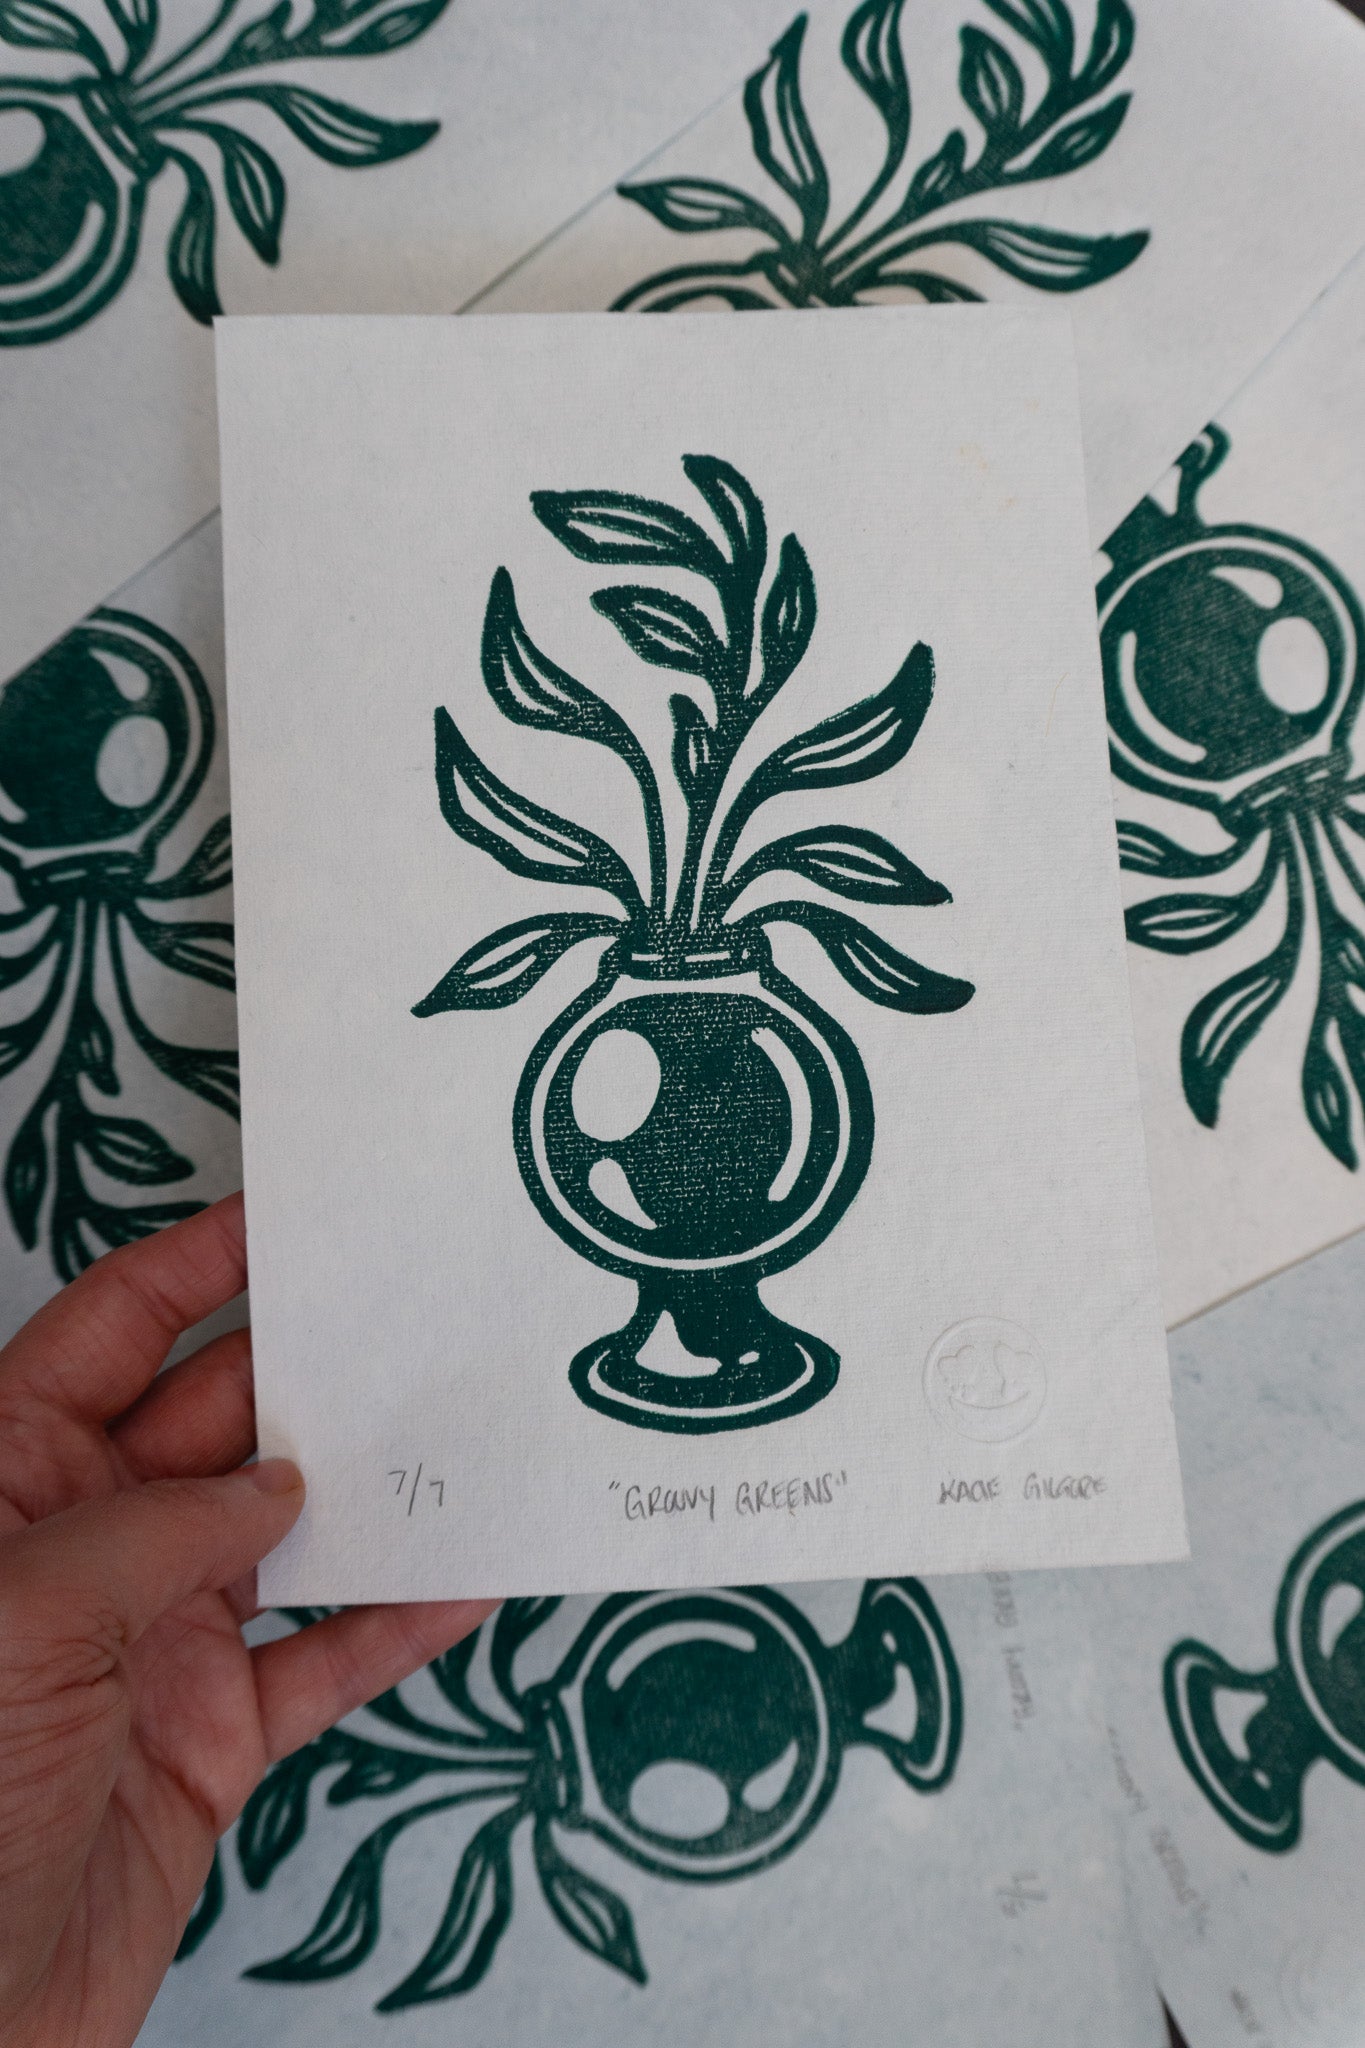 Groovy Greens Linocut Print